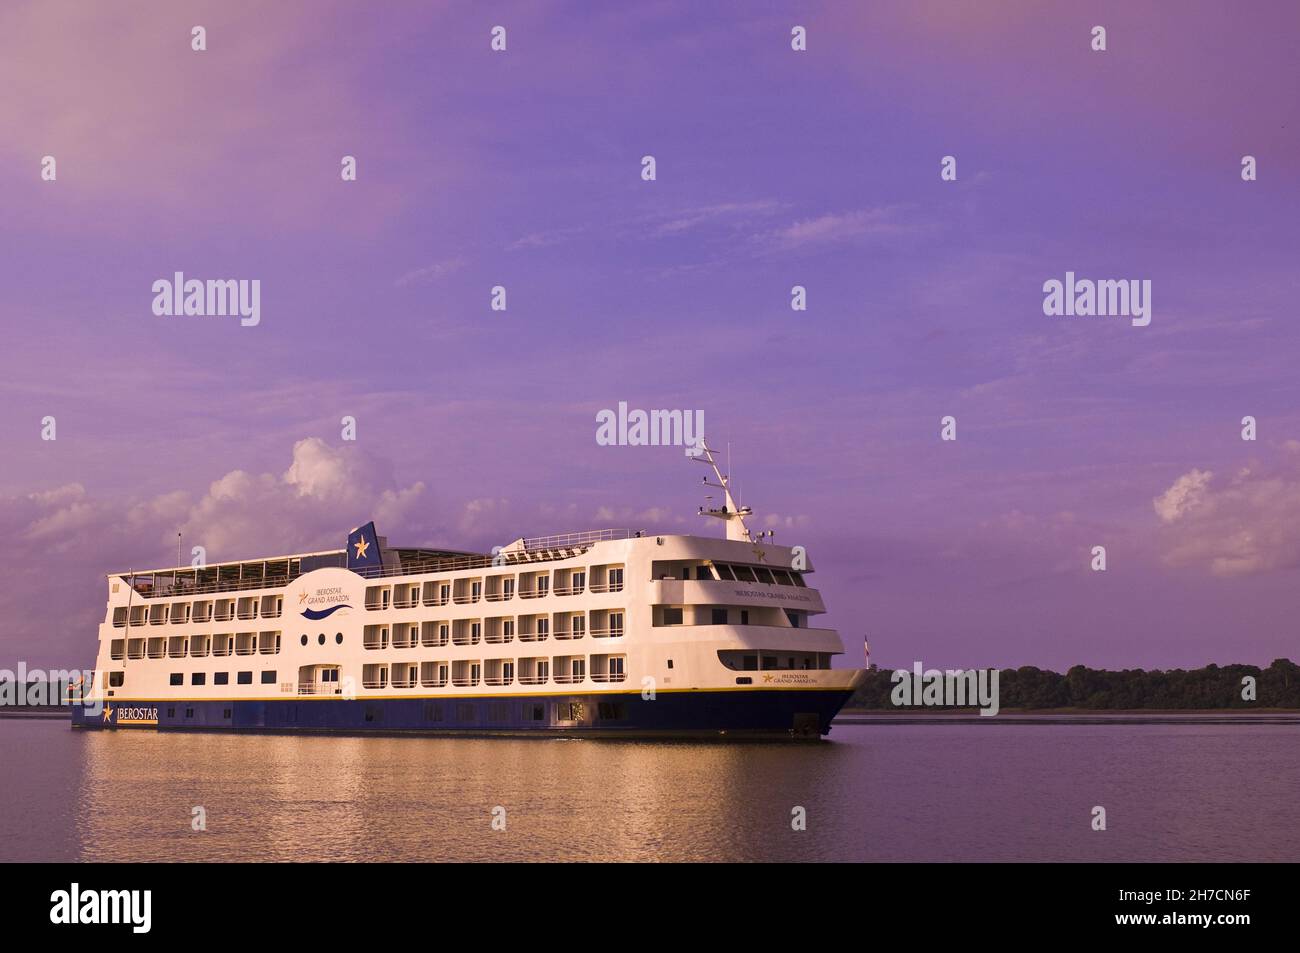 Crucero amazon fotografías e imágenes de alta resolución - Alamy